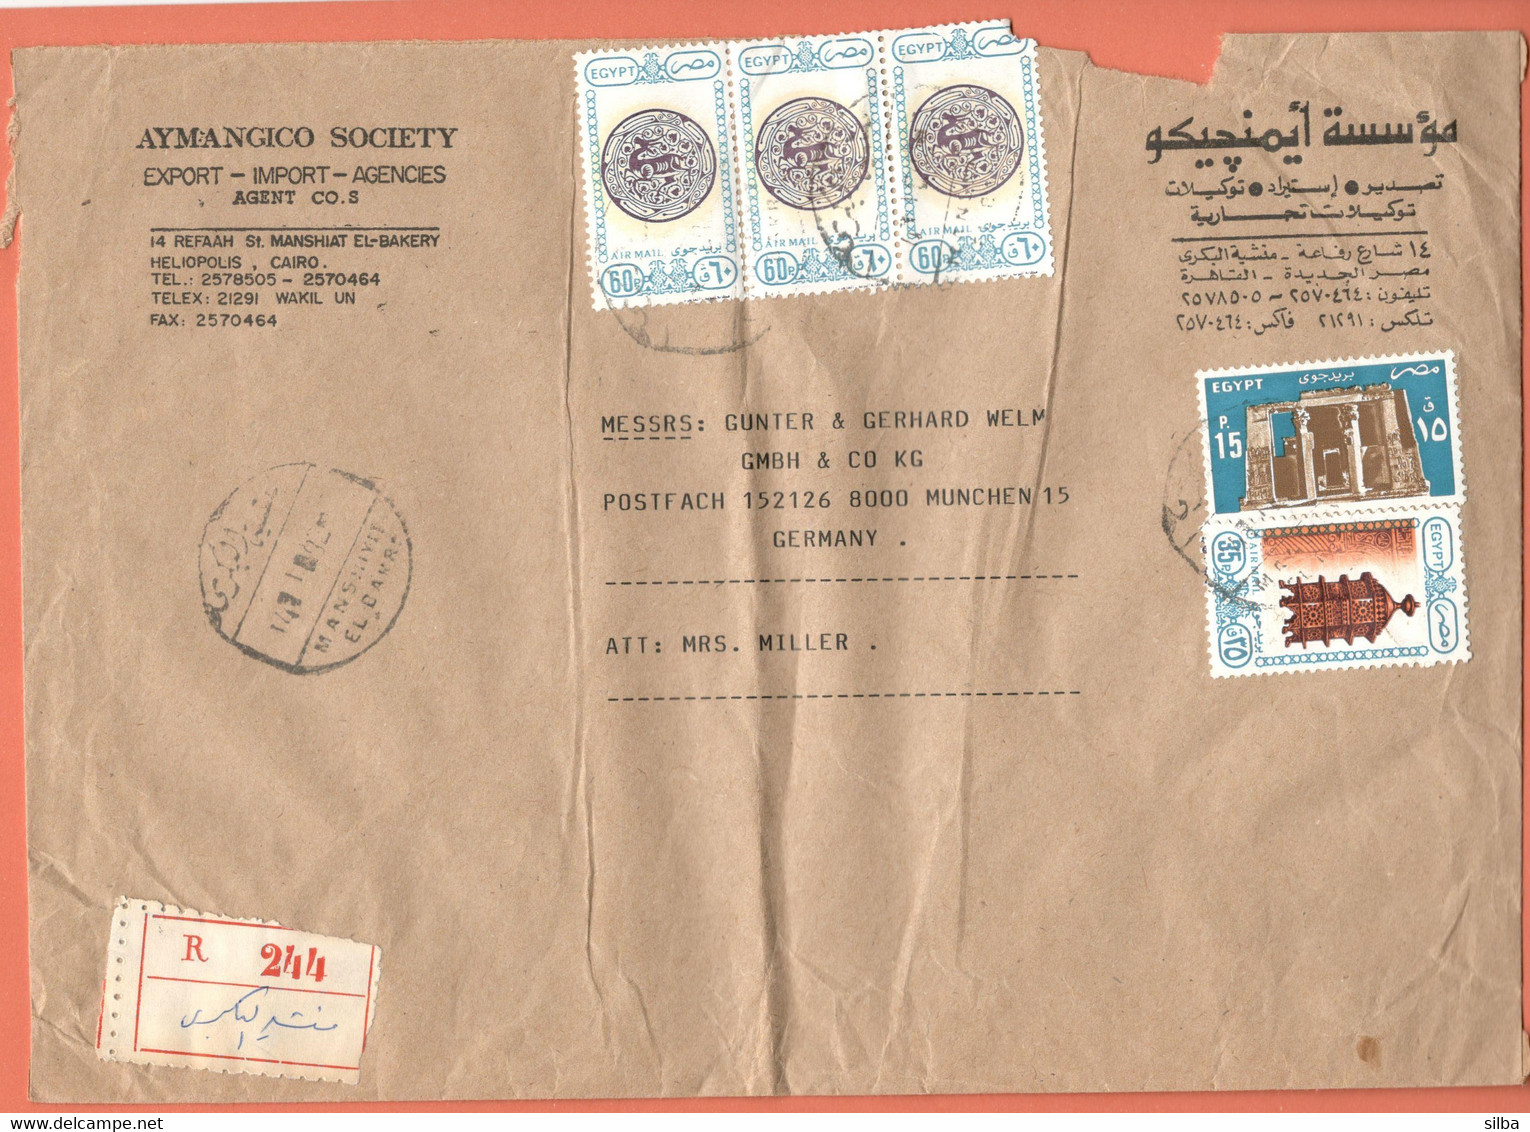 Egypt / Airmail - Art And Mosques, Lantern 35 P, Dish With Gazelle Motif - 60 P, 1989, Edfu Temple, 15 P, 1985 - Storia Postale